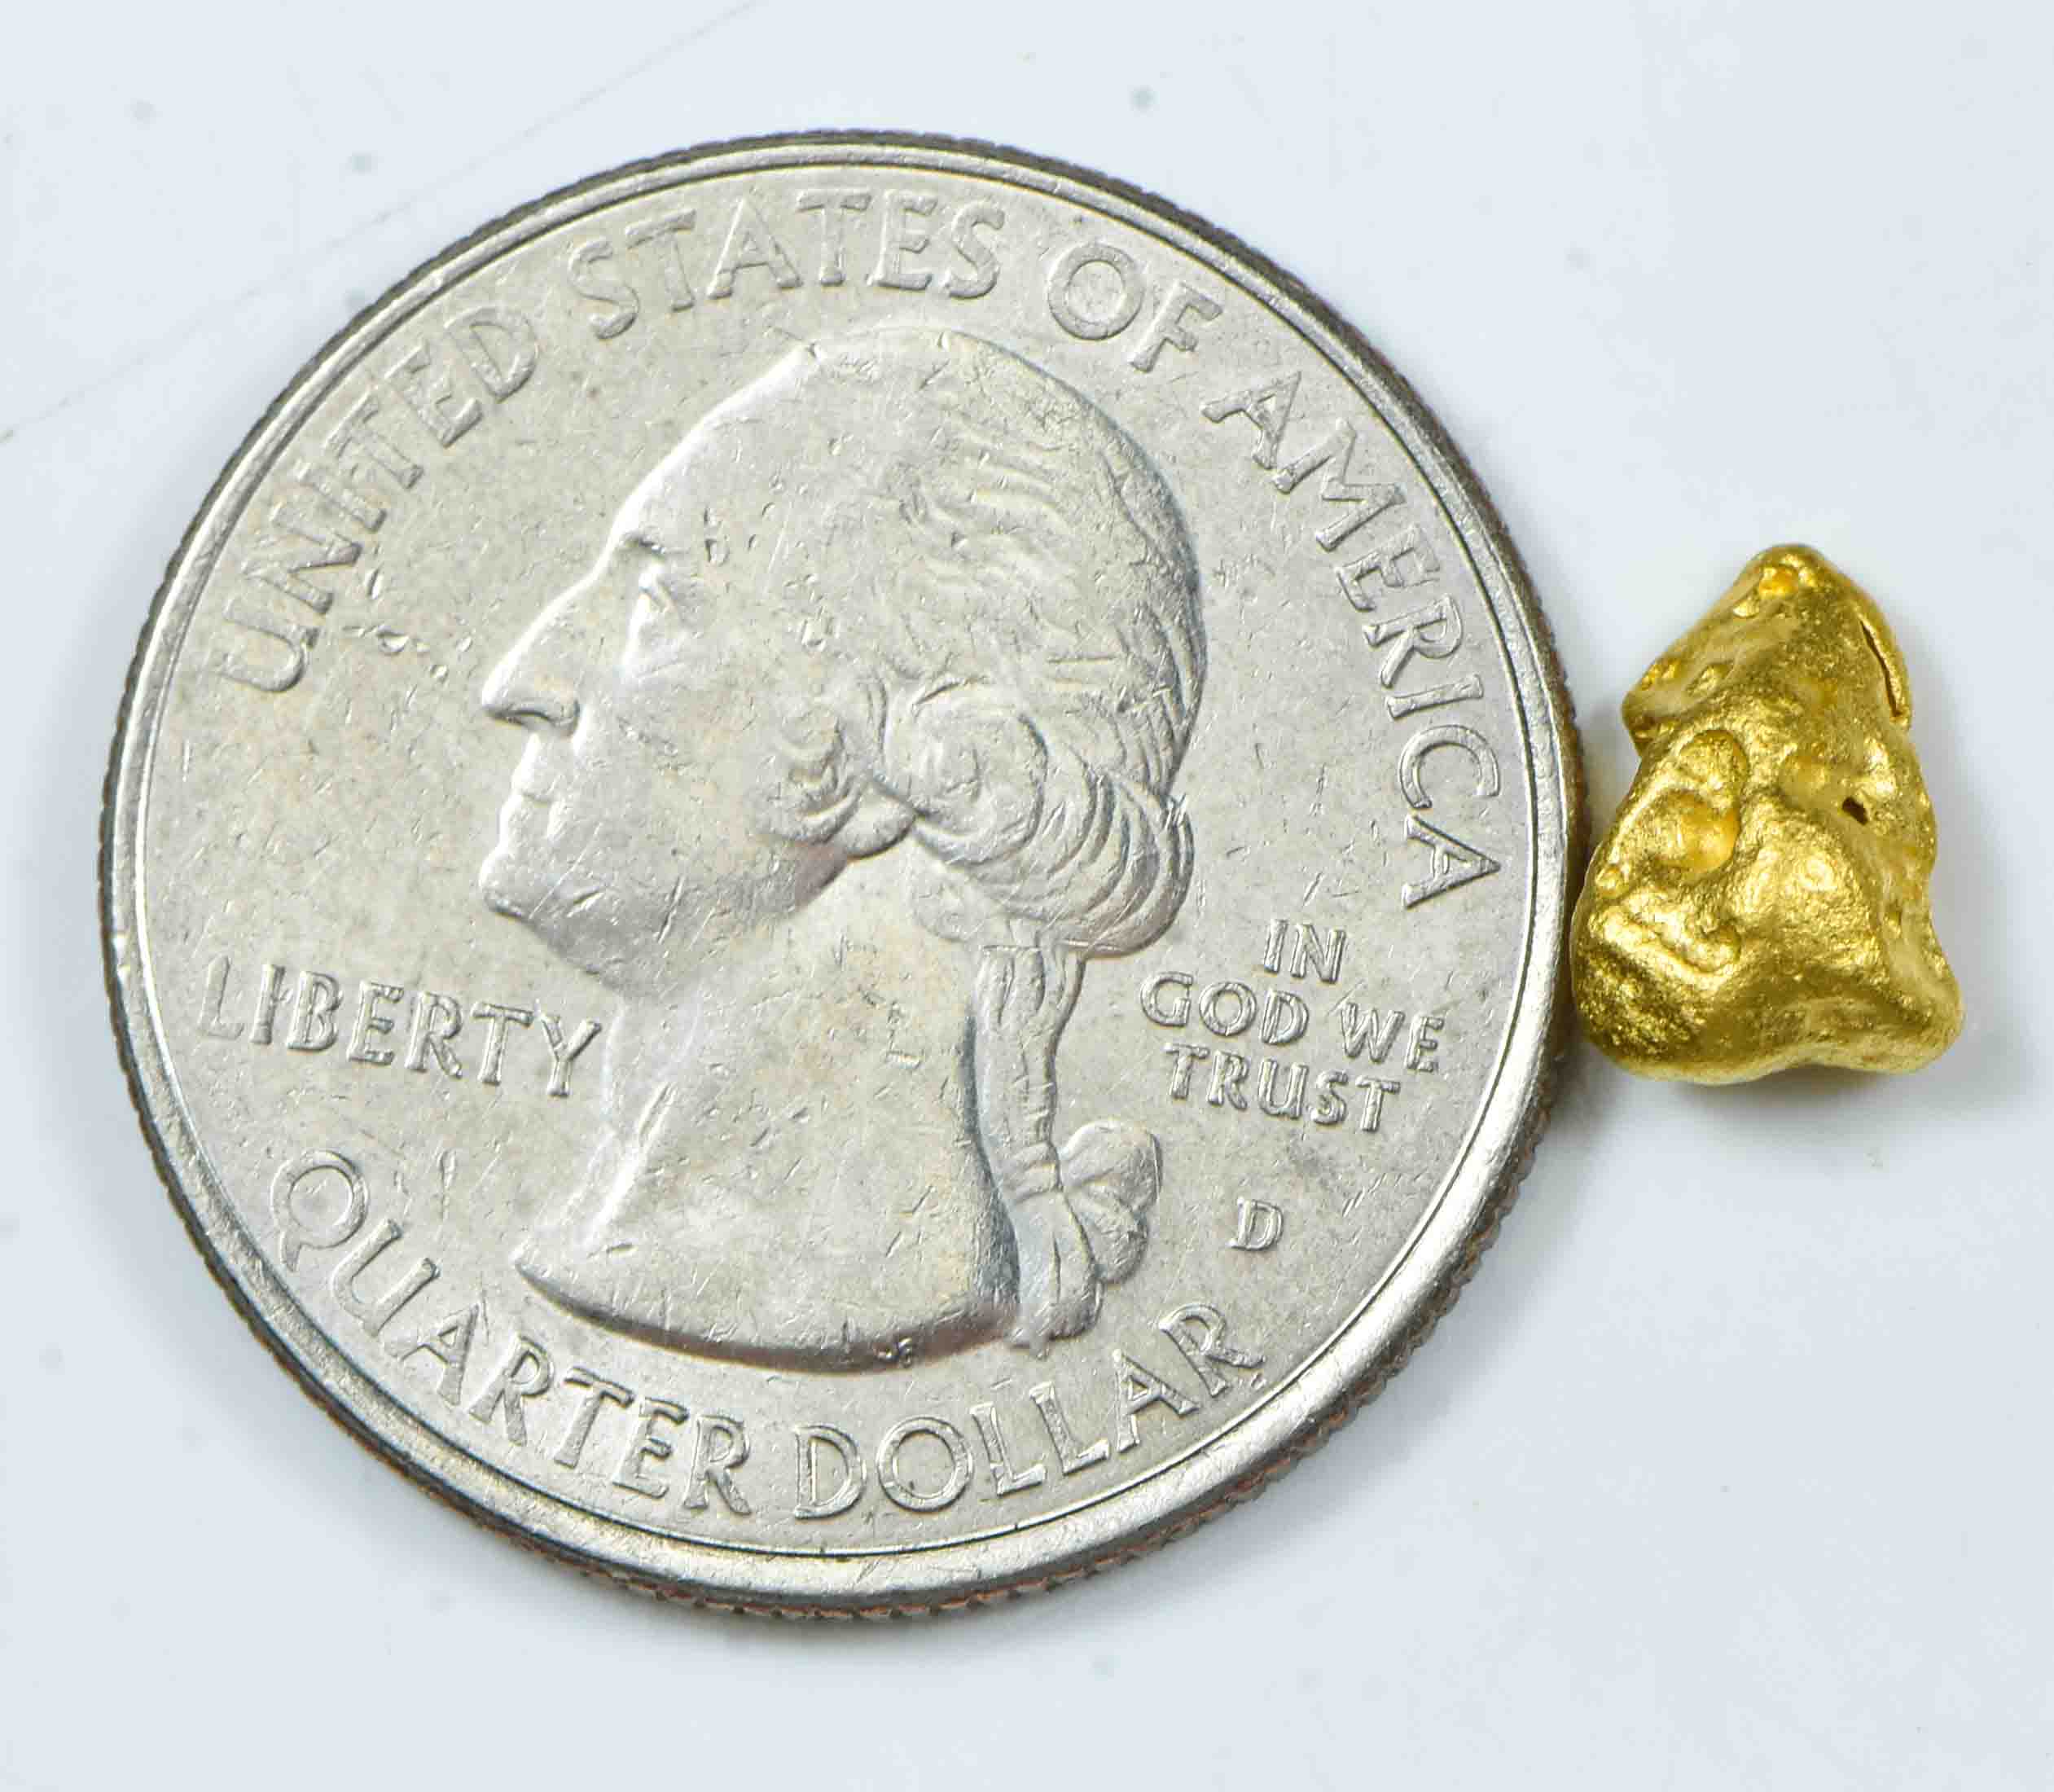 #812 Natural Gold Nugget Australian 1.29 Grams Genuine